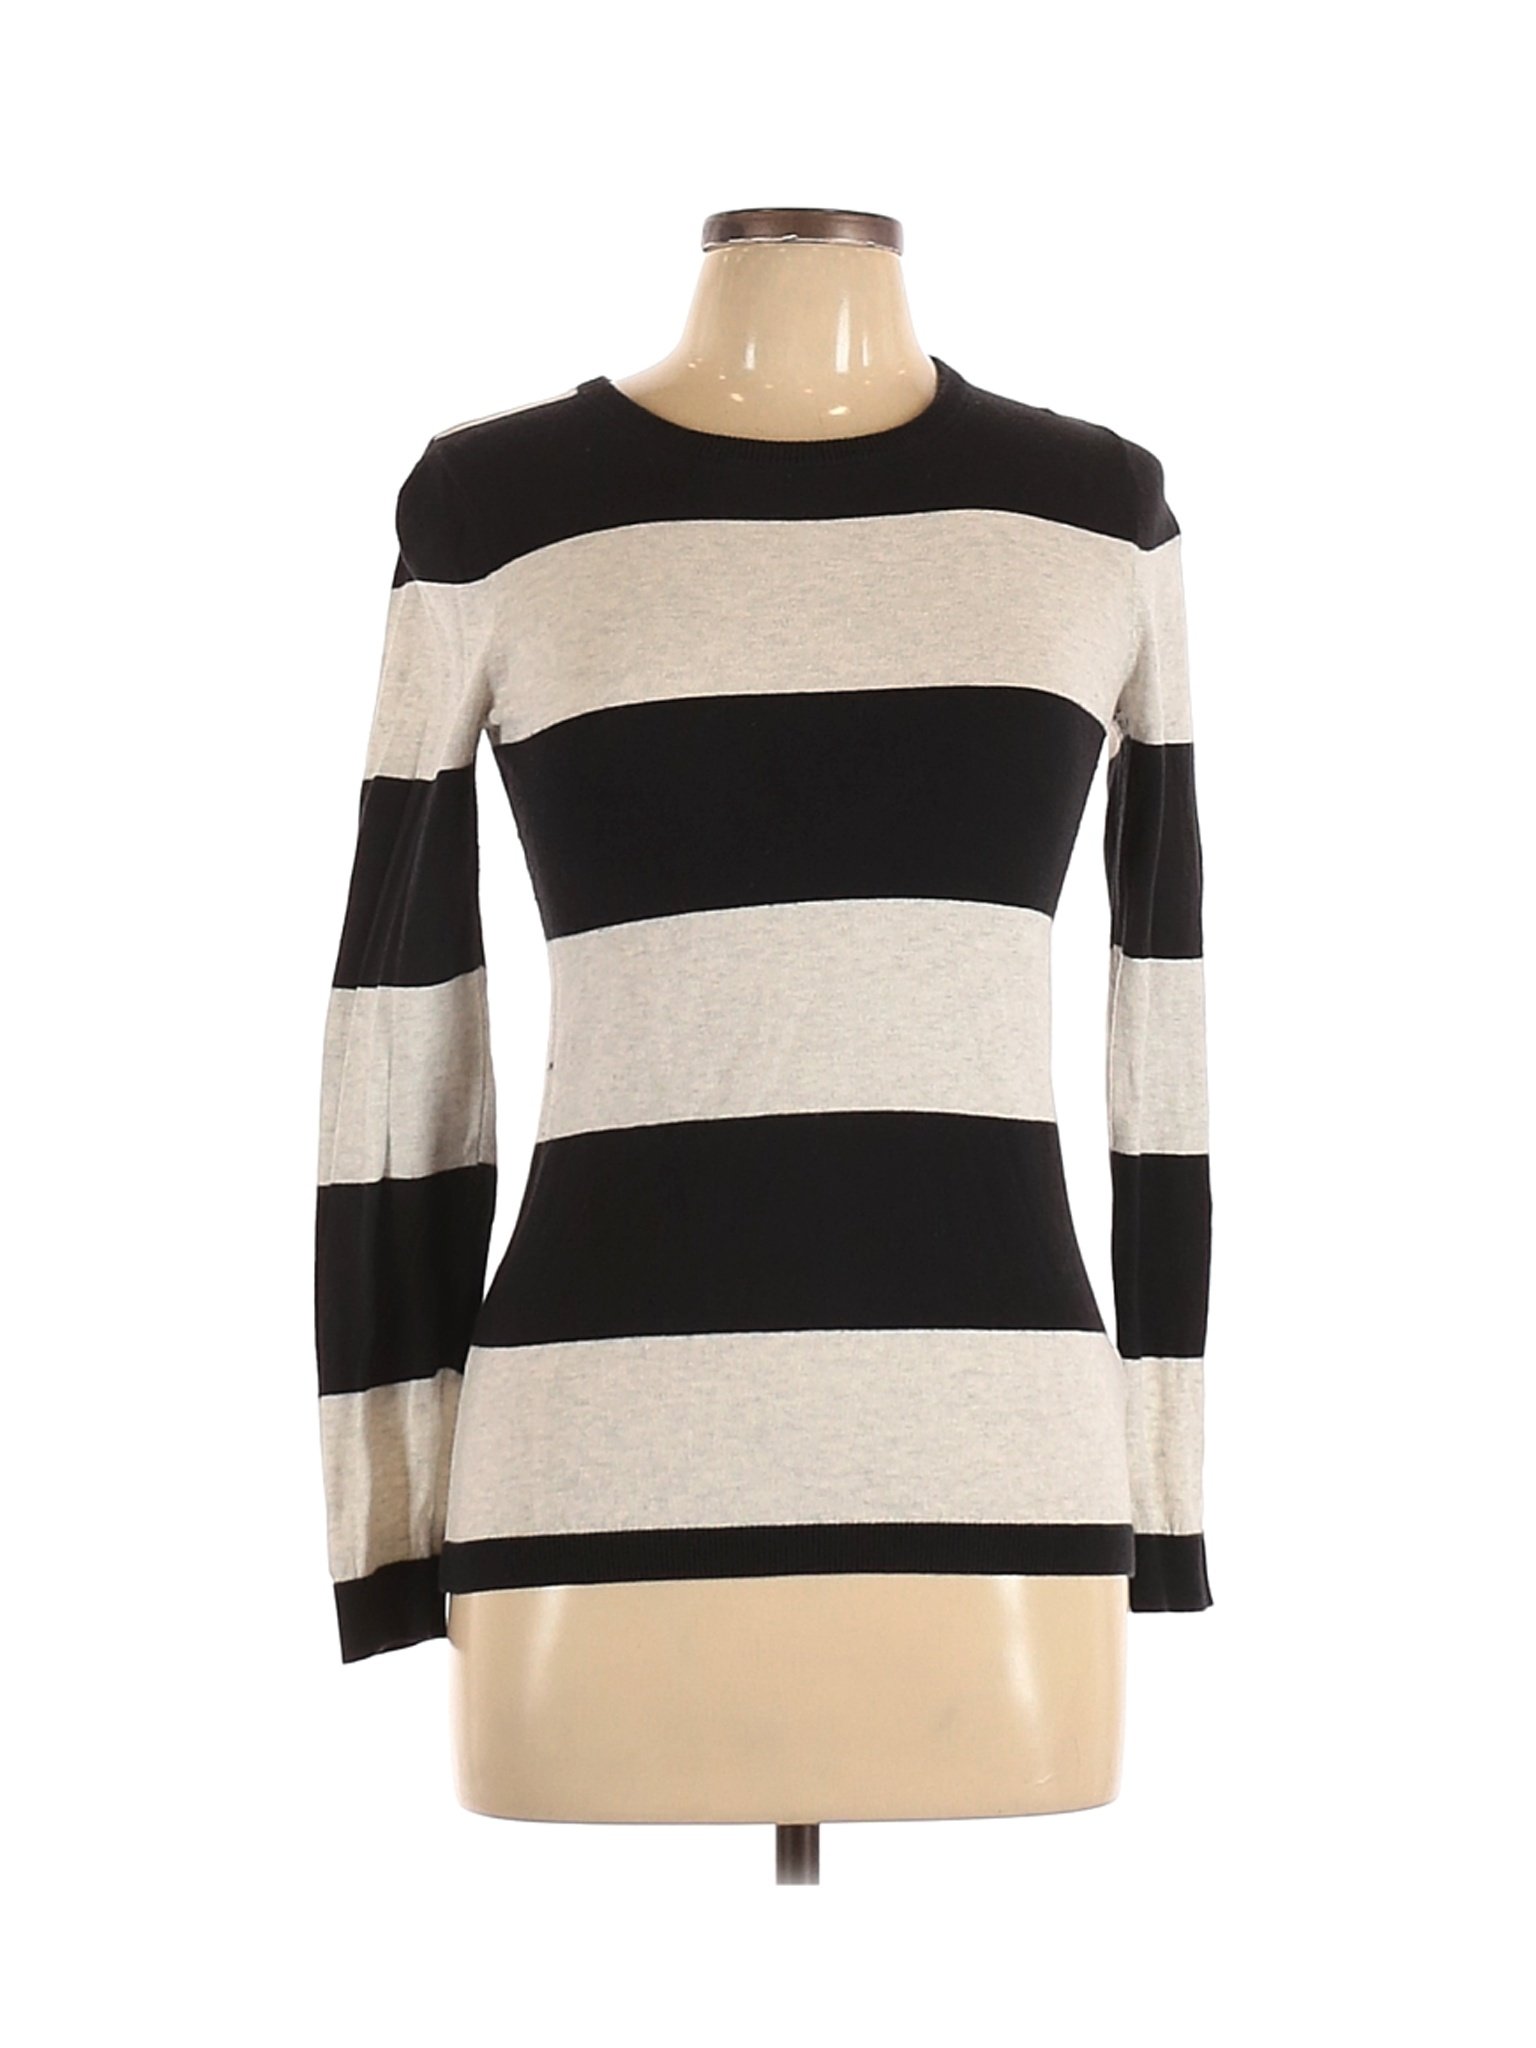 Old Navy Women Black Pullover Sweater S | eBay